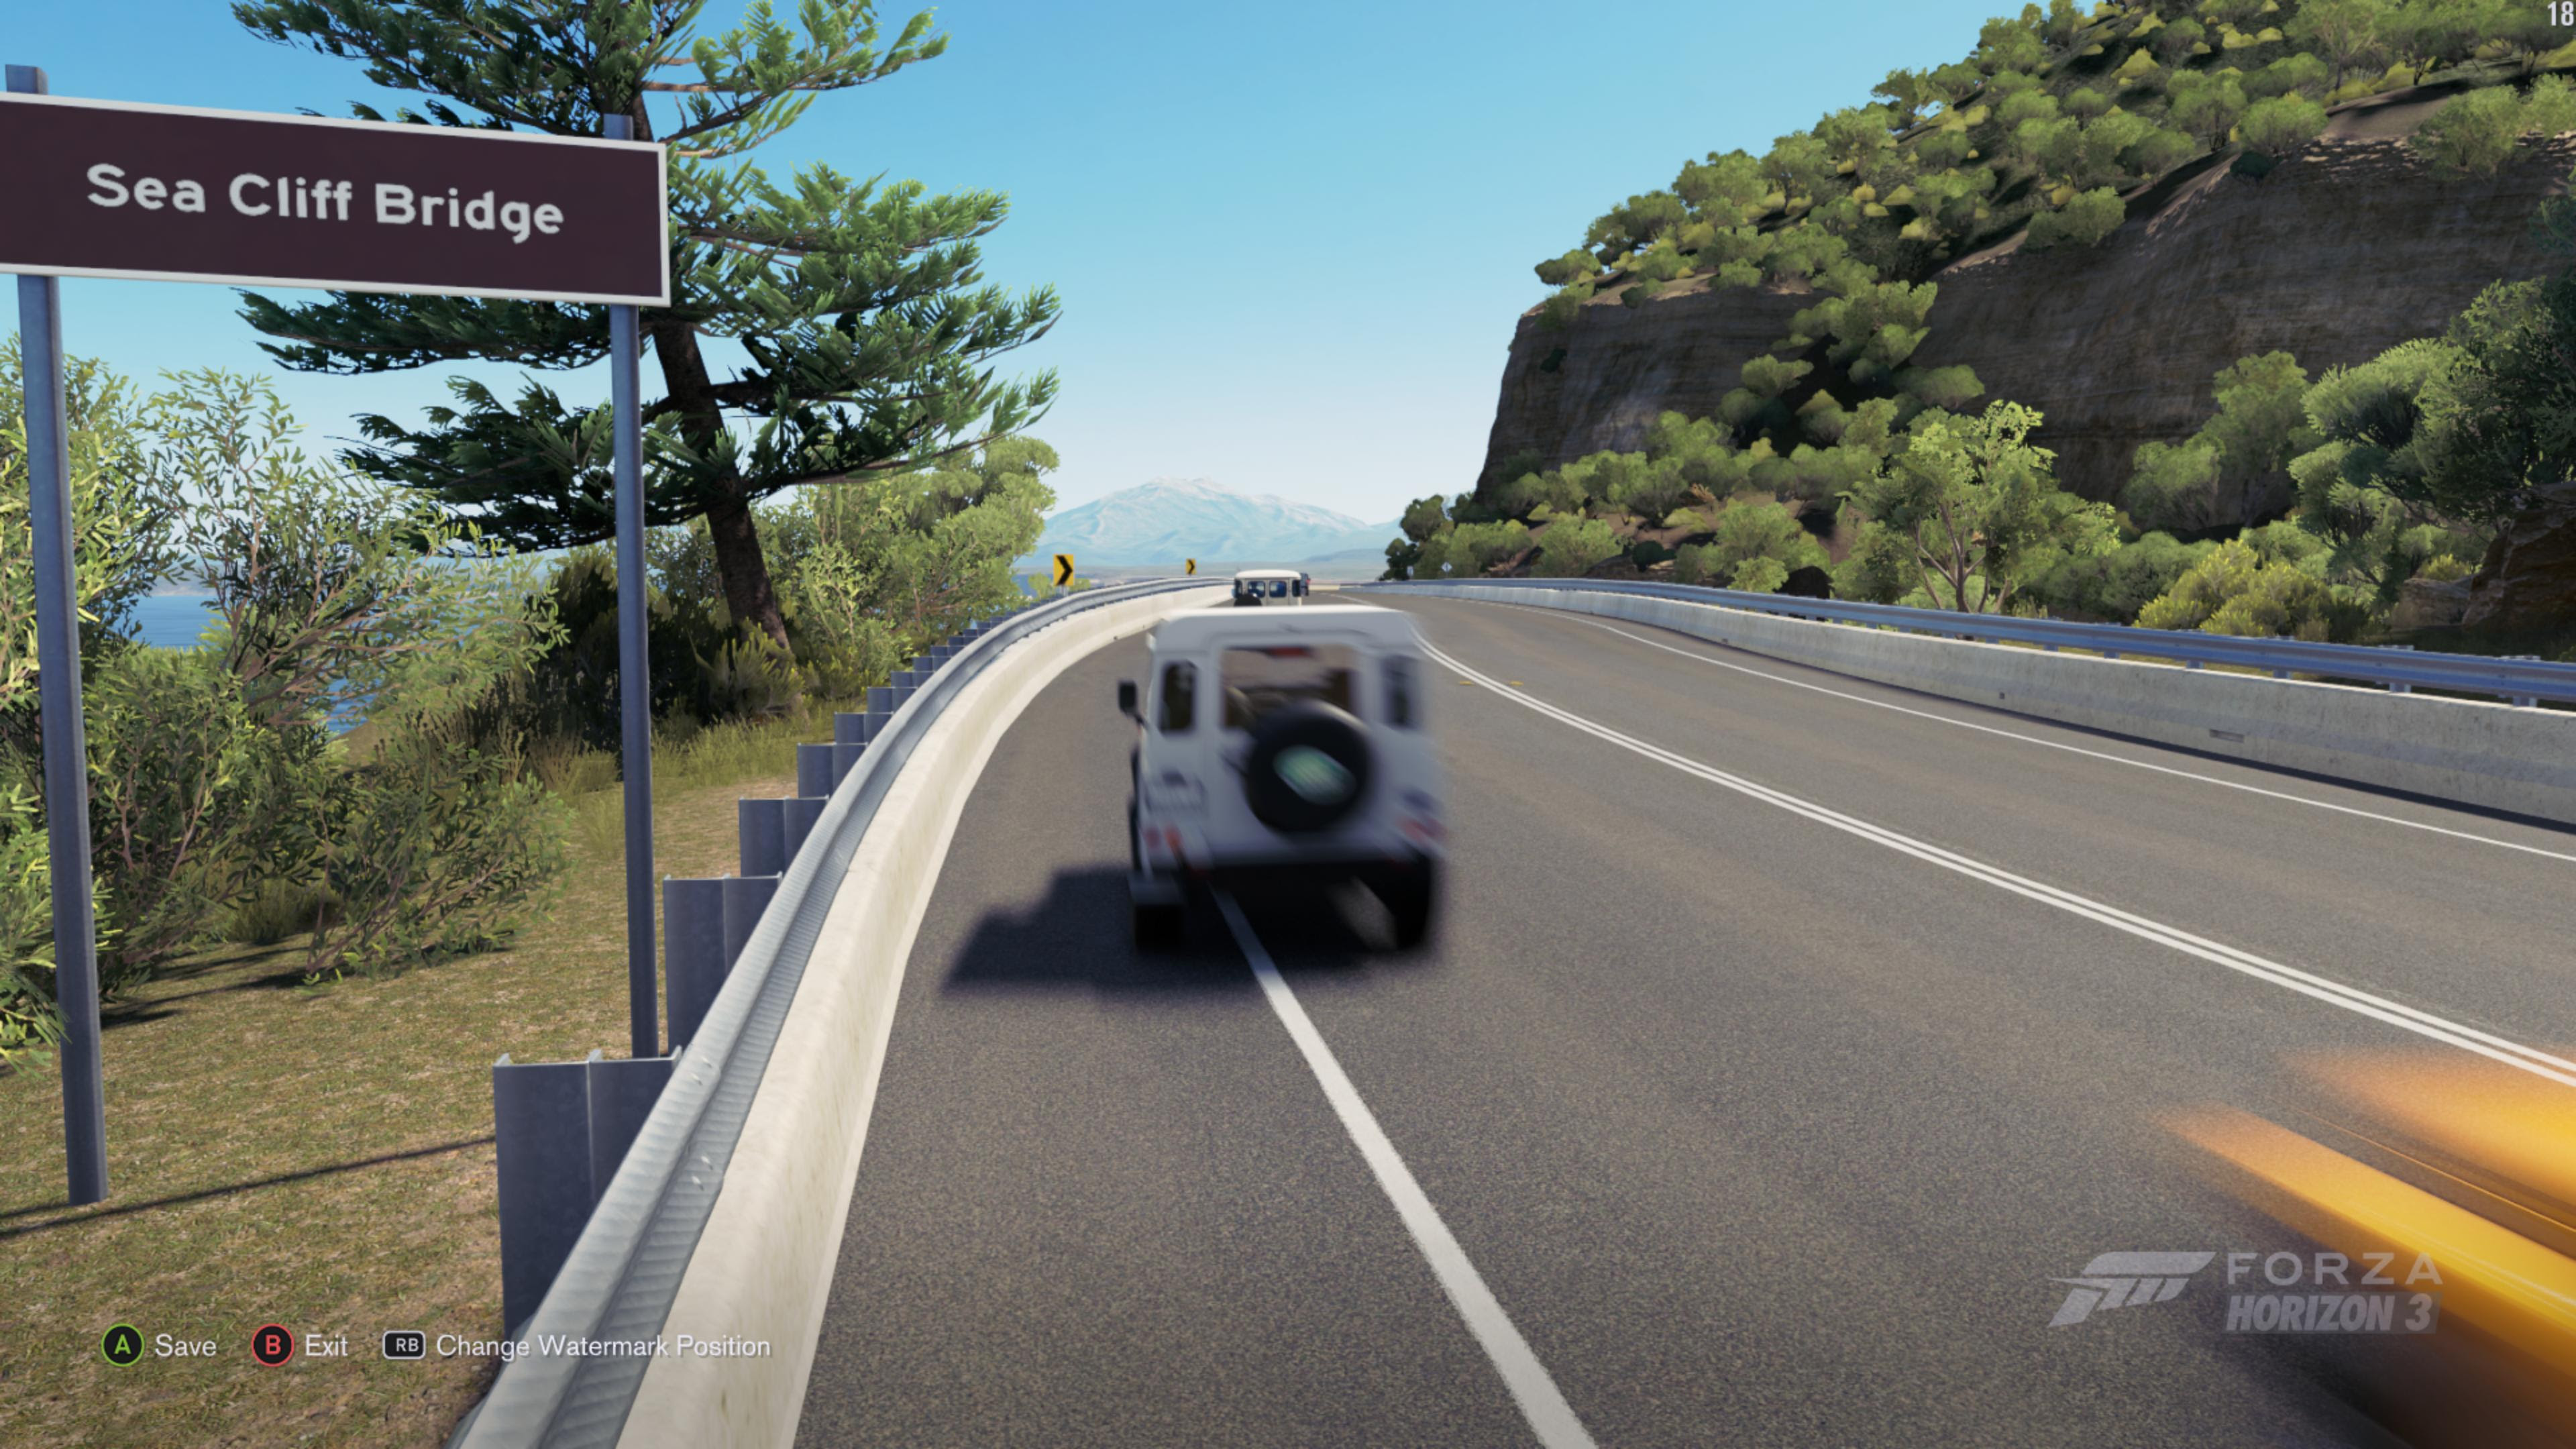 Drive Australia's Open Roads in Native 4K with Forza Horizon 3